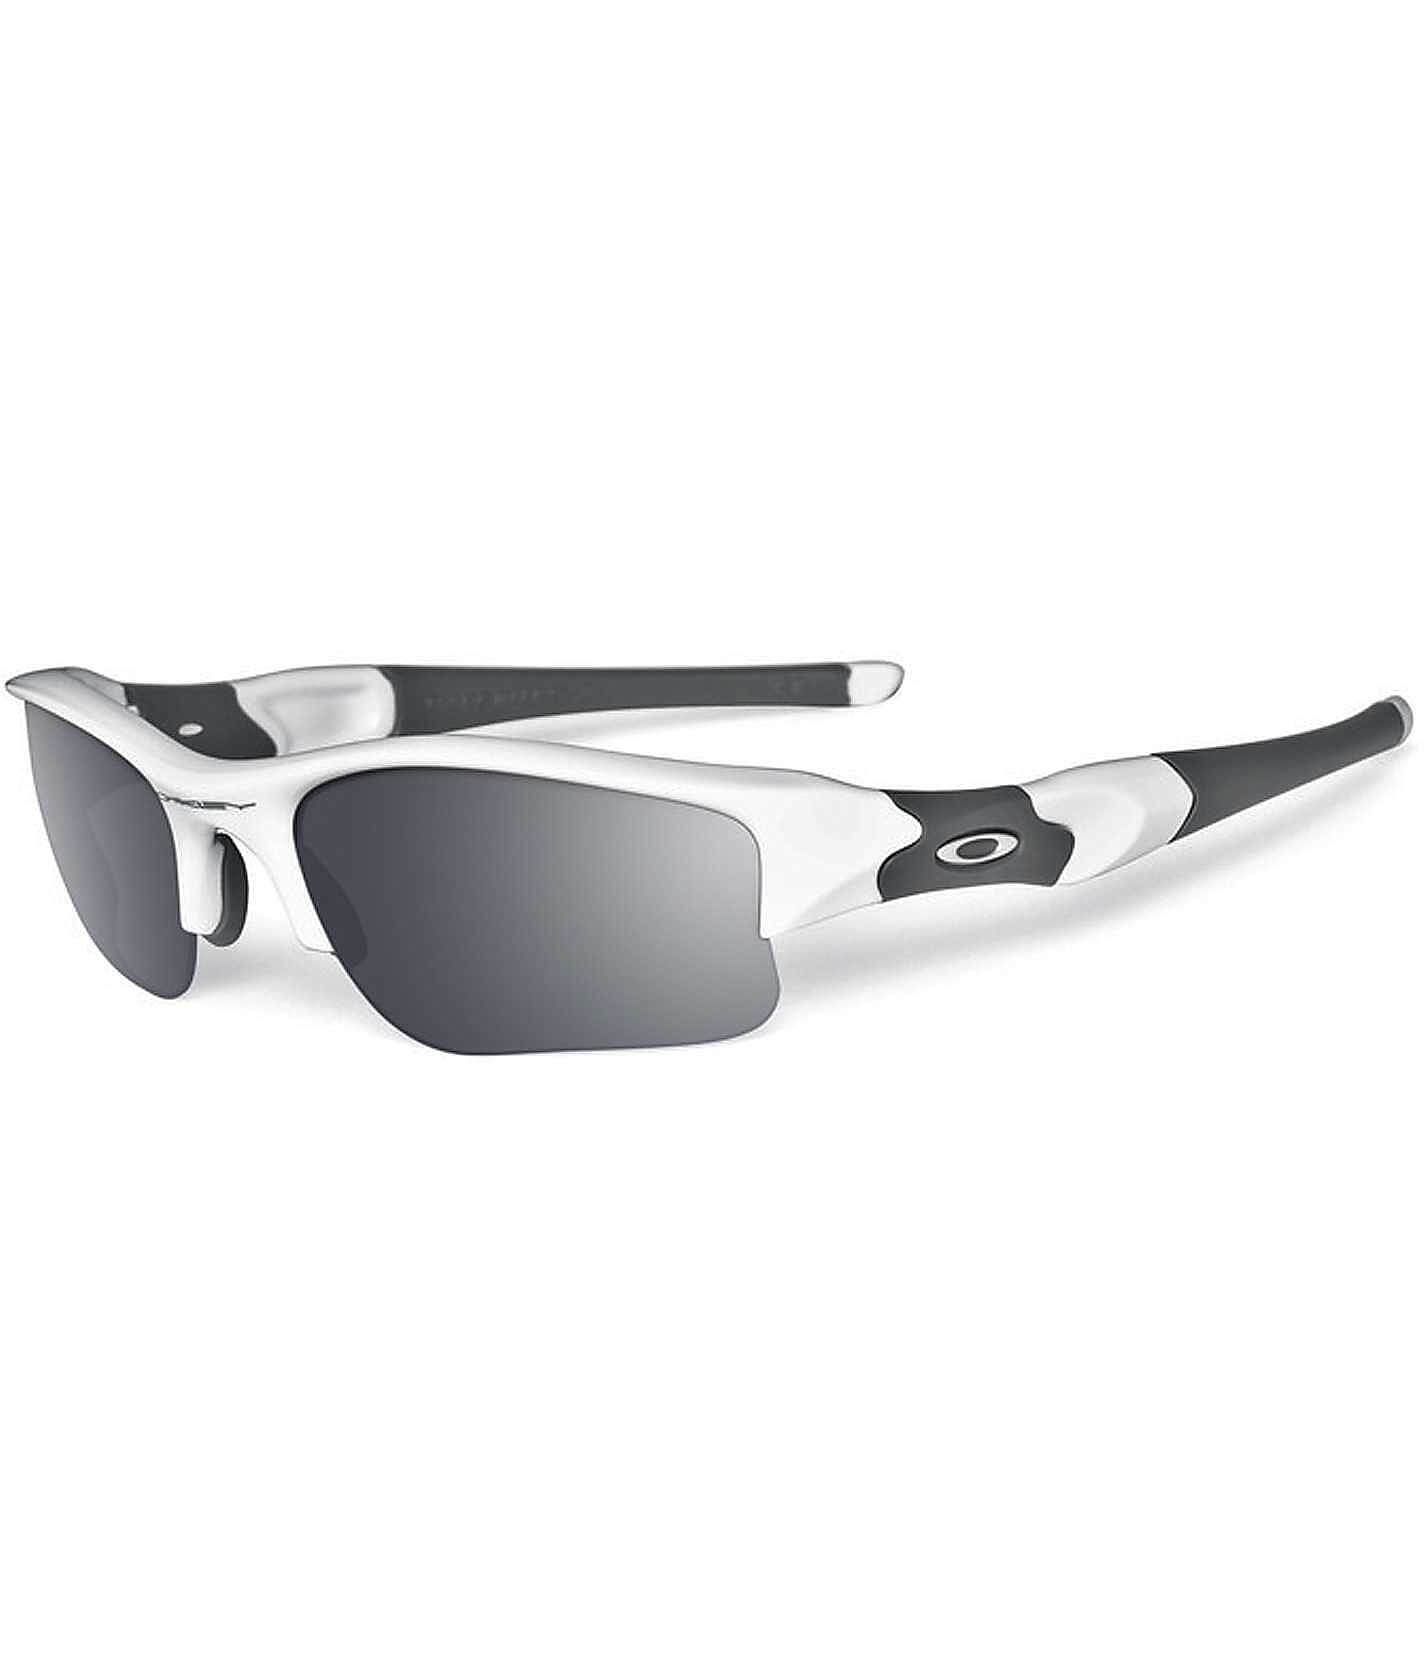 Oakley Flak Jacket XLJ Sunglasses - Men's Sunglasses & Glasses in White  Black Iridium | Buckle